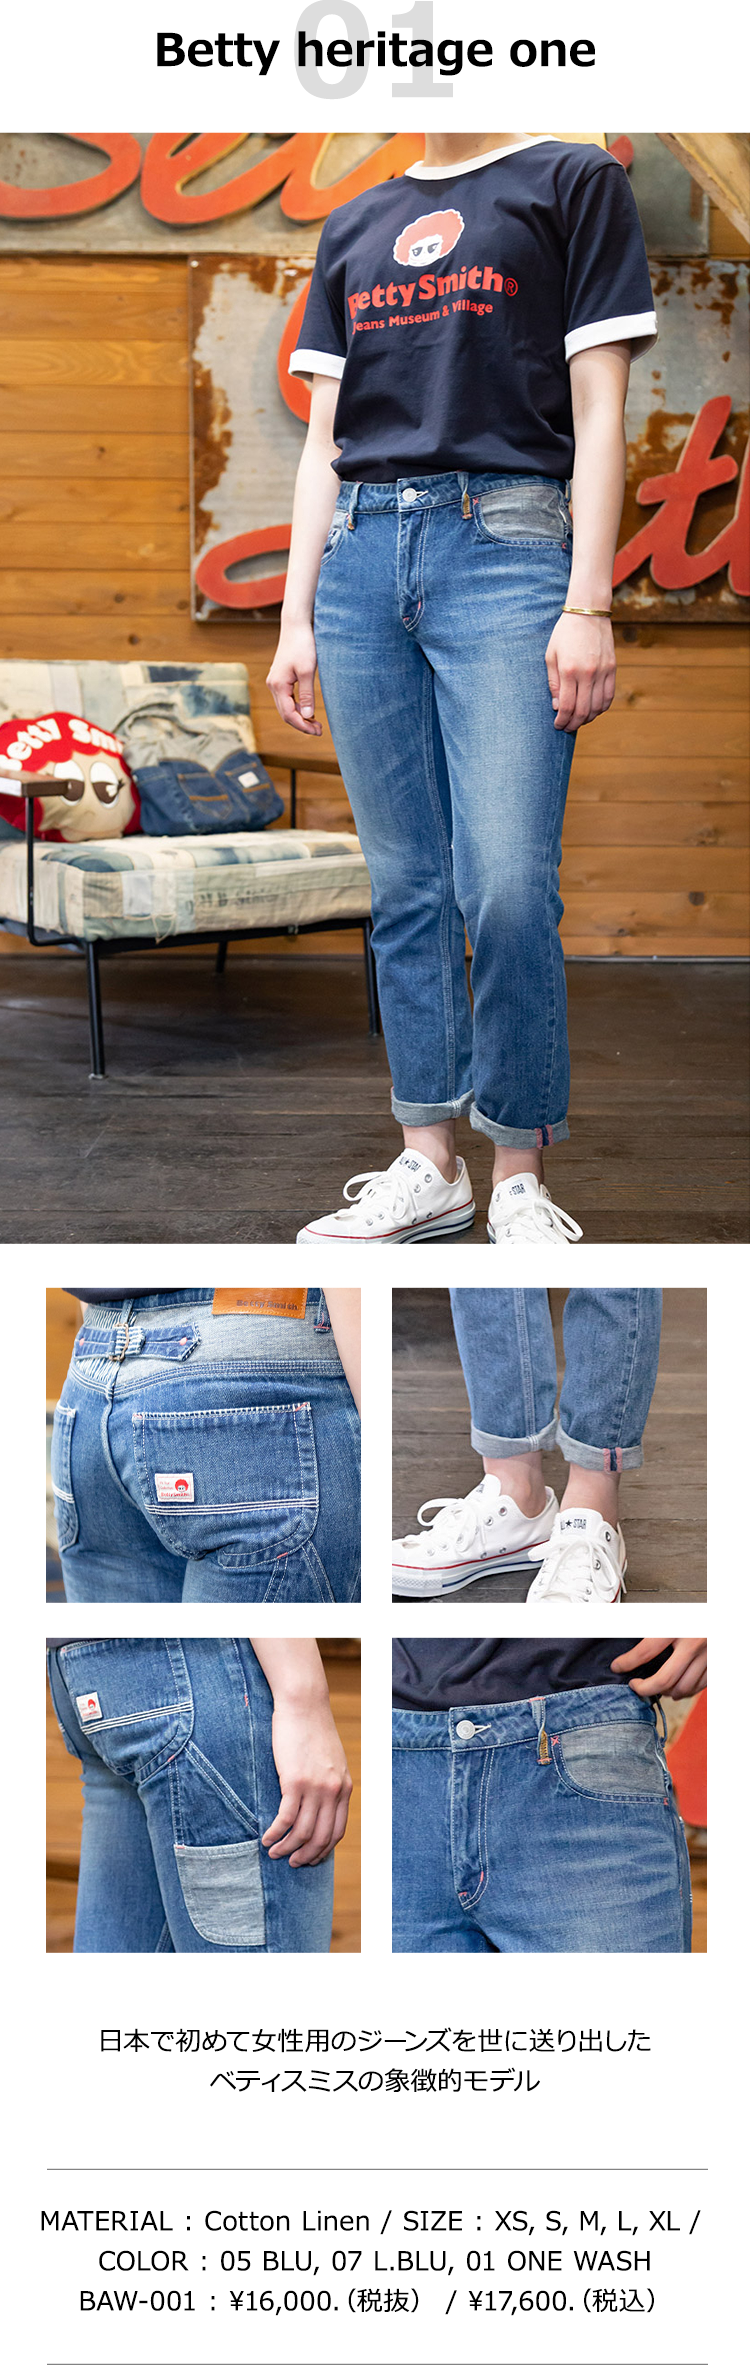 Betty heritage one 日本で初めて女性用のジーンズを世に送り出したベティスミスの象徴的モデル MATERIAL : Cotton Linen / SIZE : XS, S, M, L / COLOR : 05 BLU, 07 L.BLU BAW-001 : ?16,000.（税抜） / ?17,600.（税込）